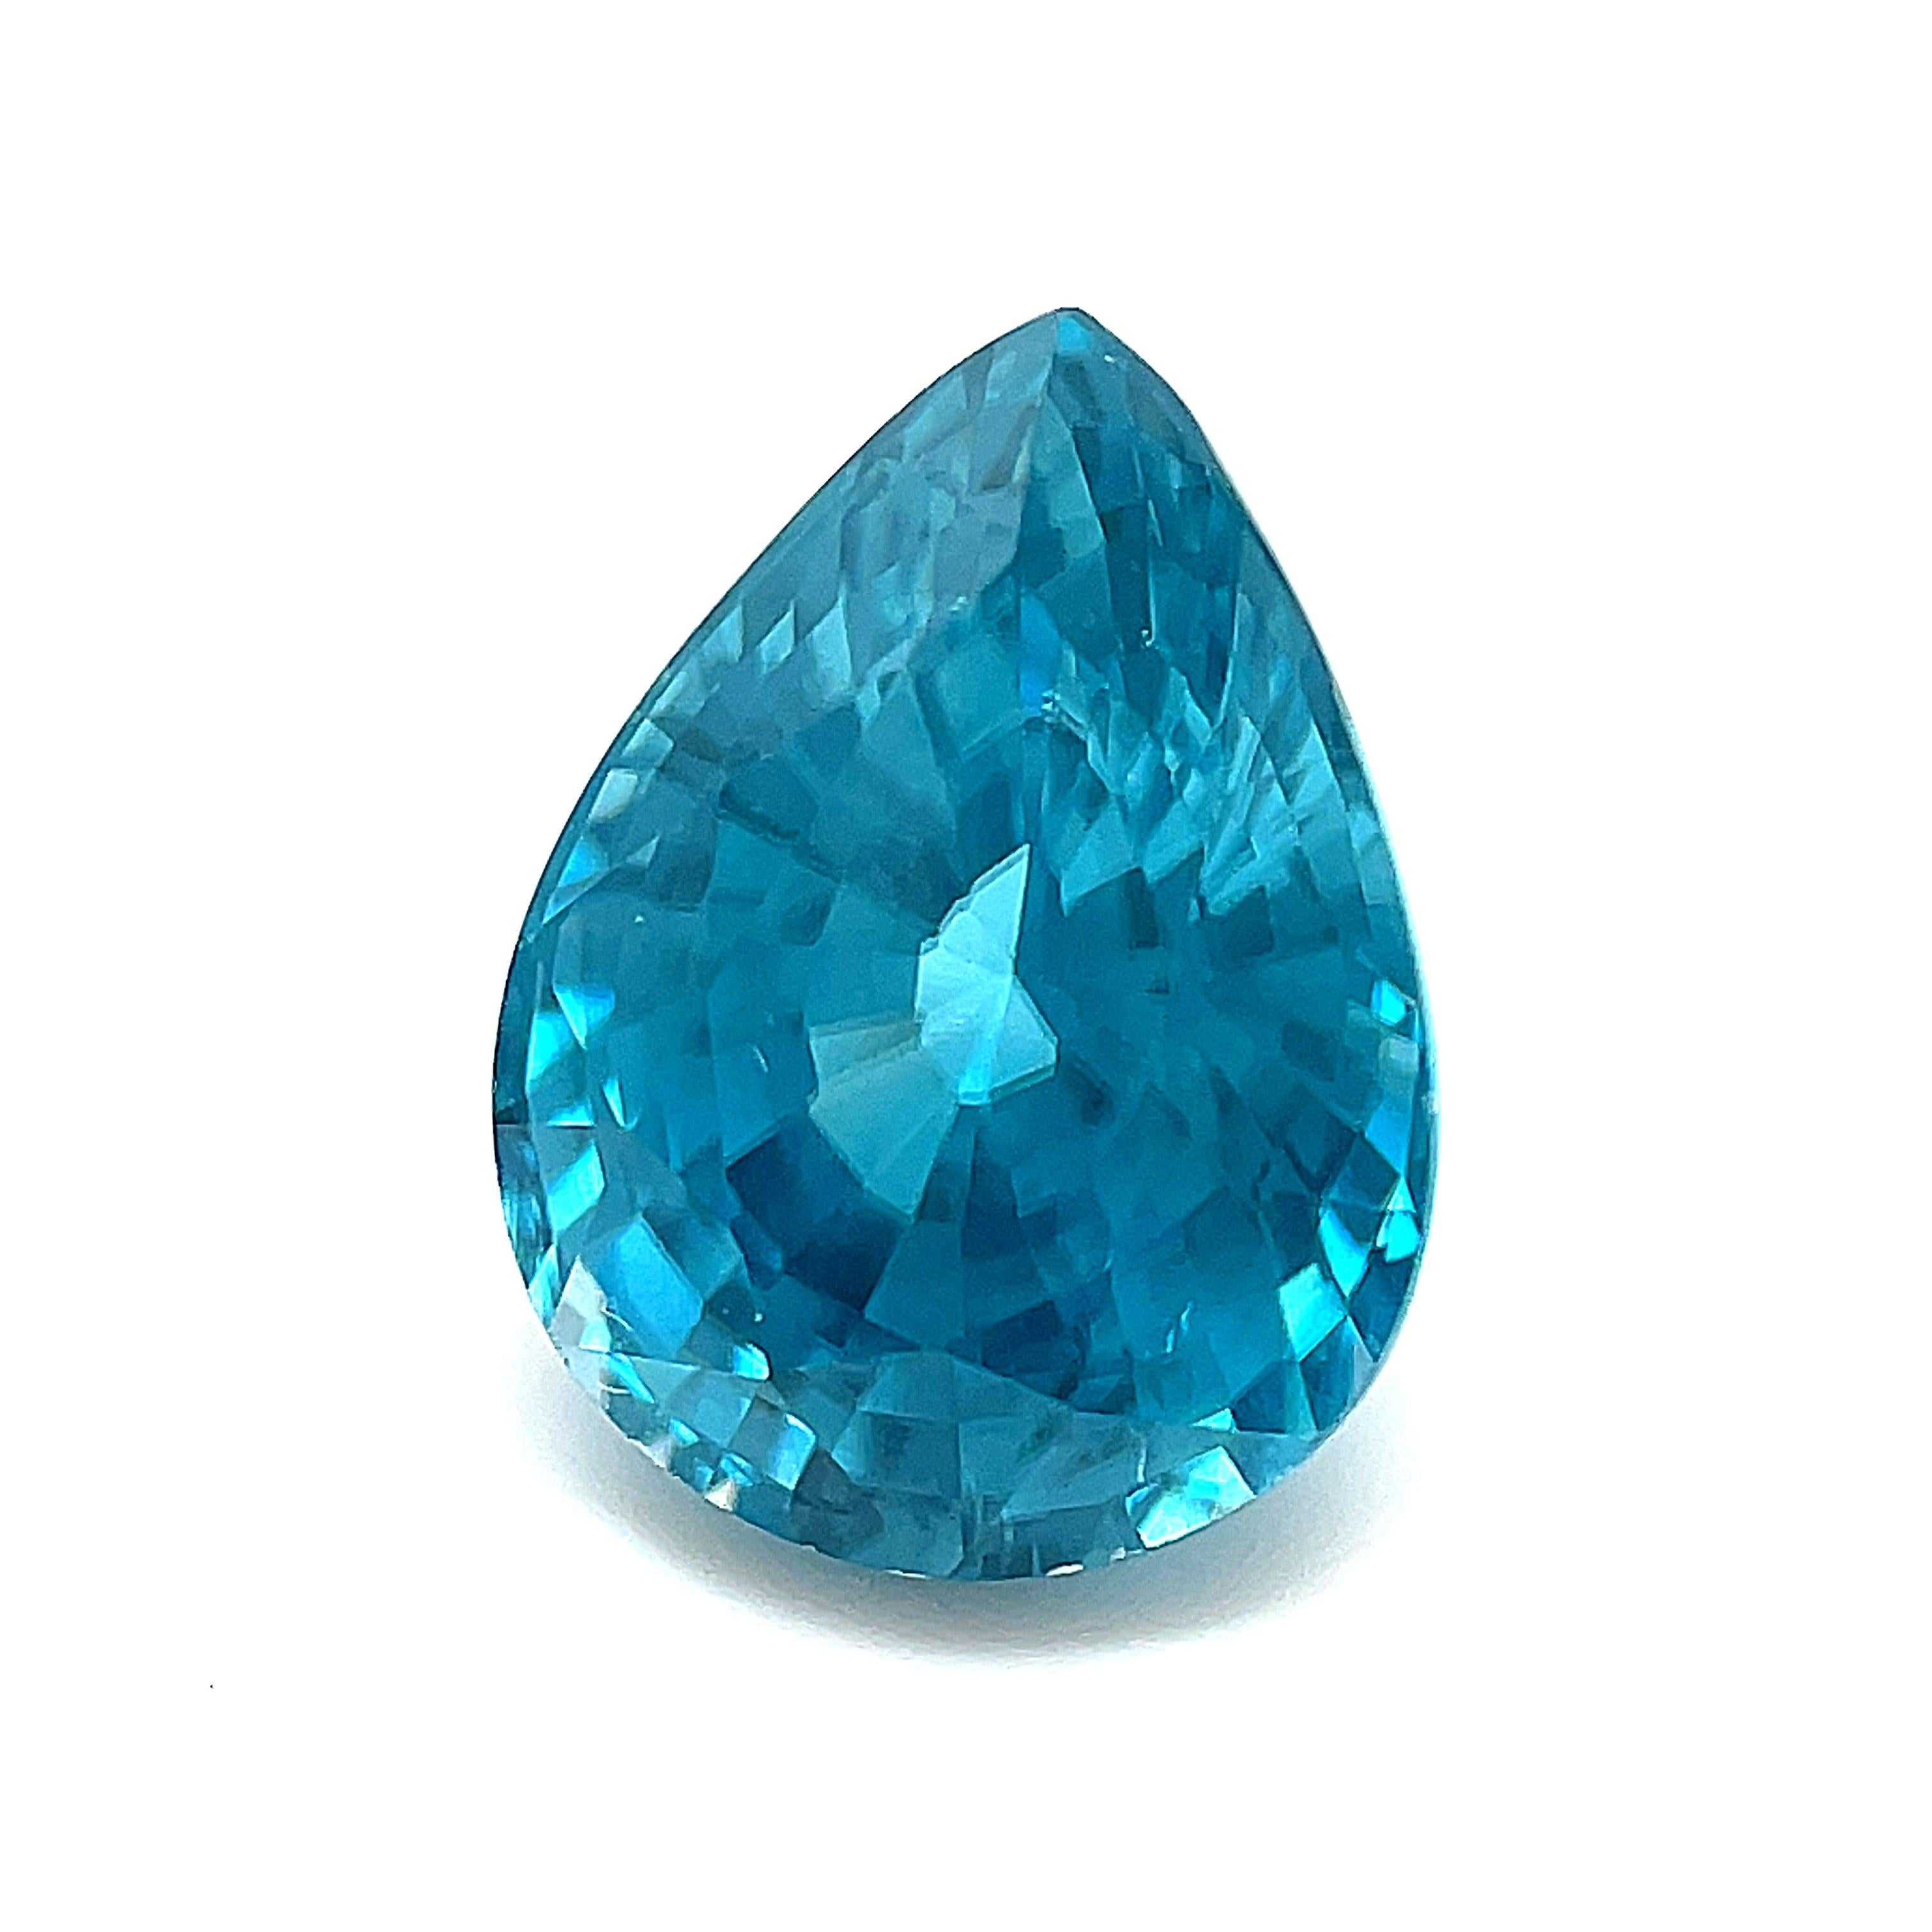 Pear Cut 4.72 Carat Pear Shaped Blue Zircon, Unset Loose Gemstone  For Sale